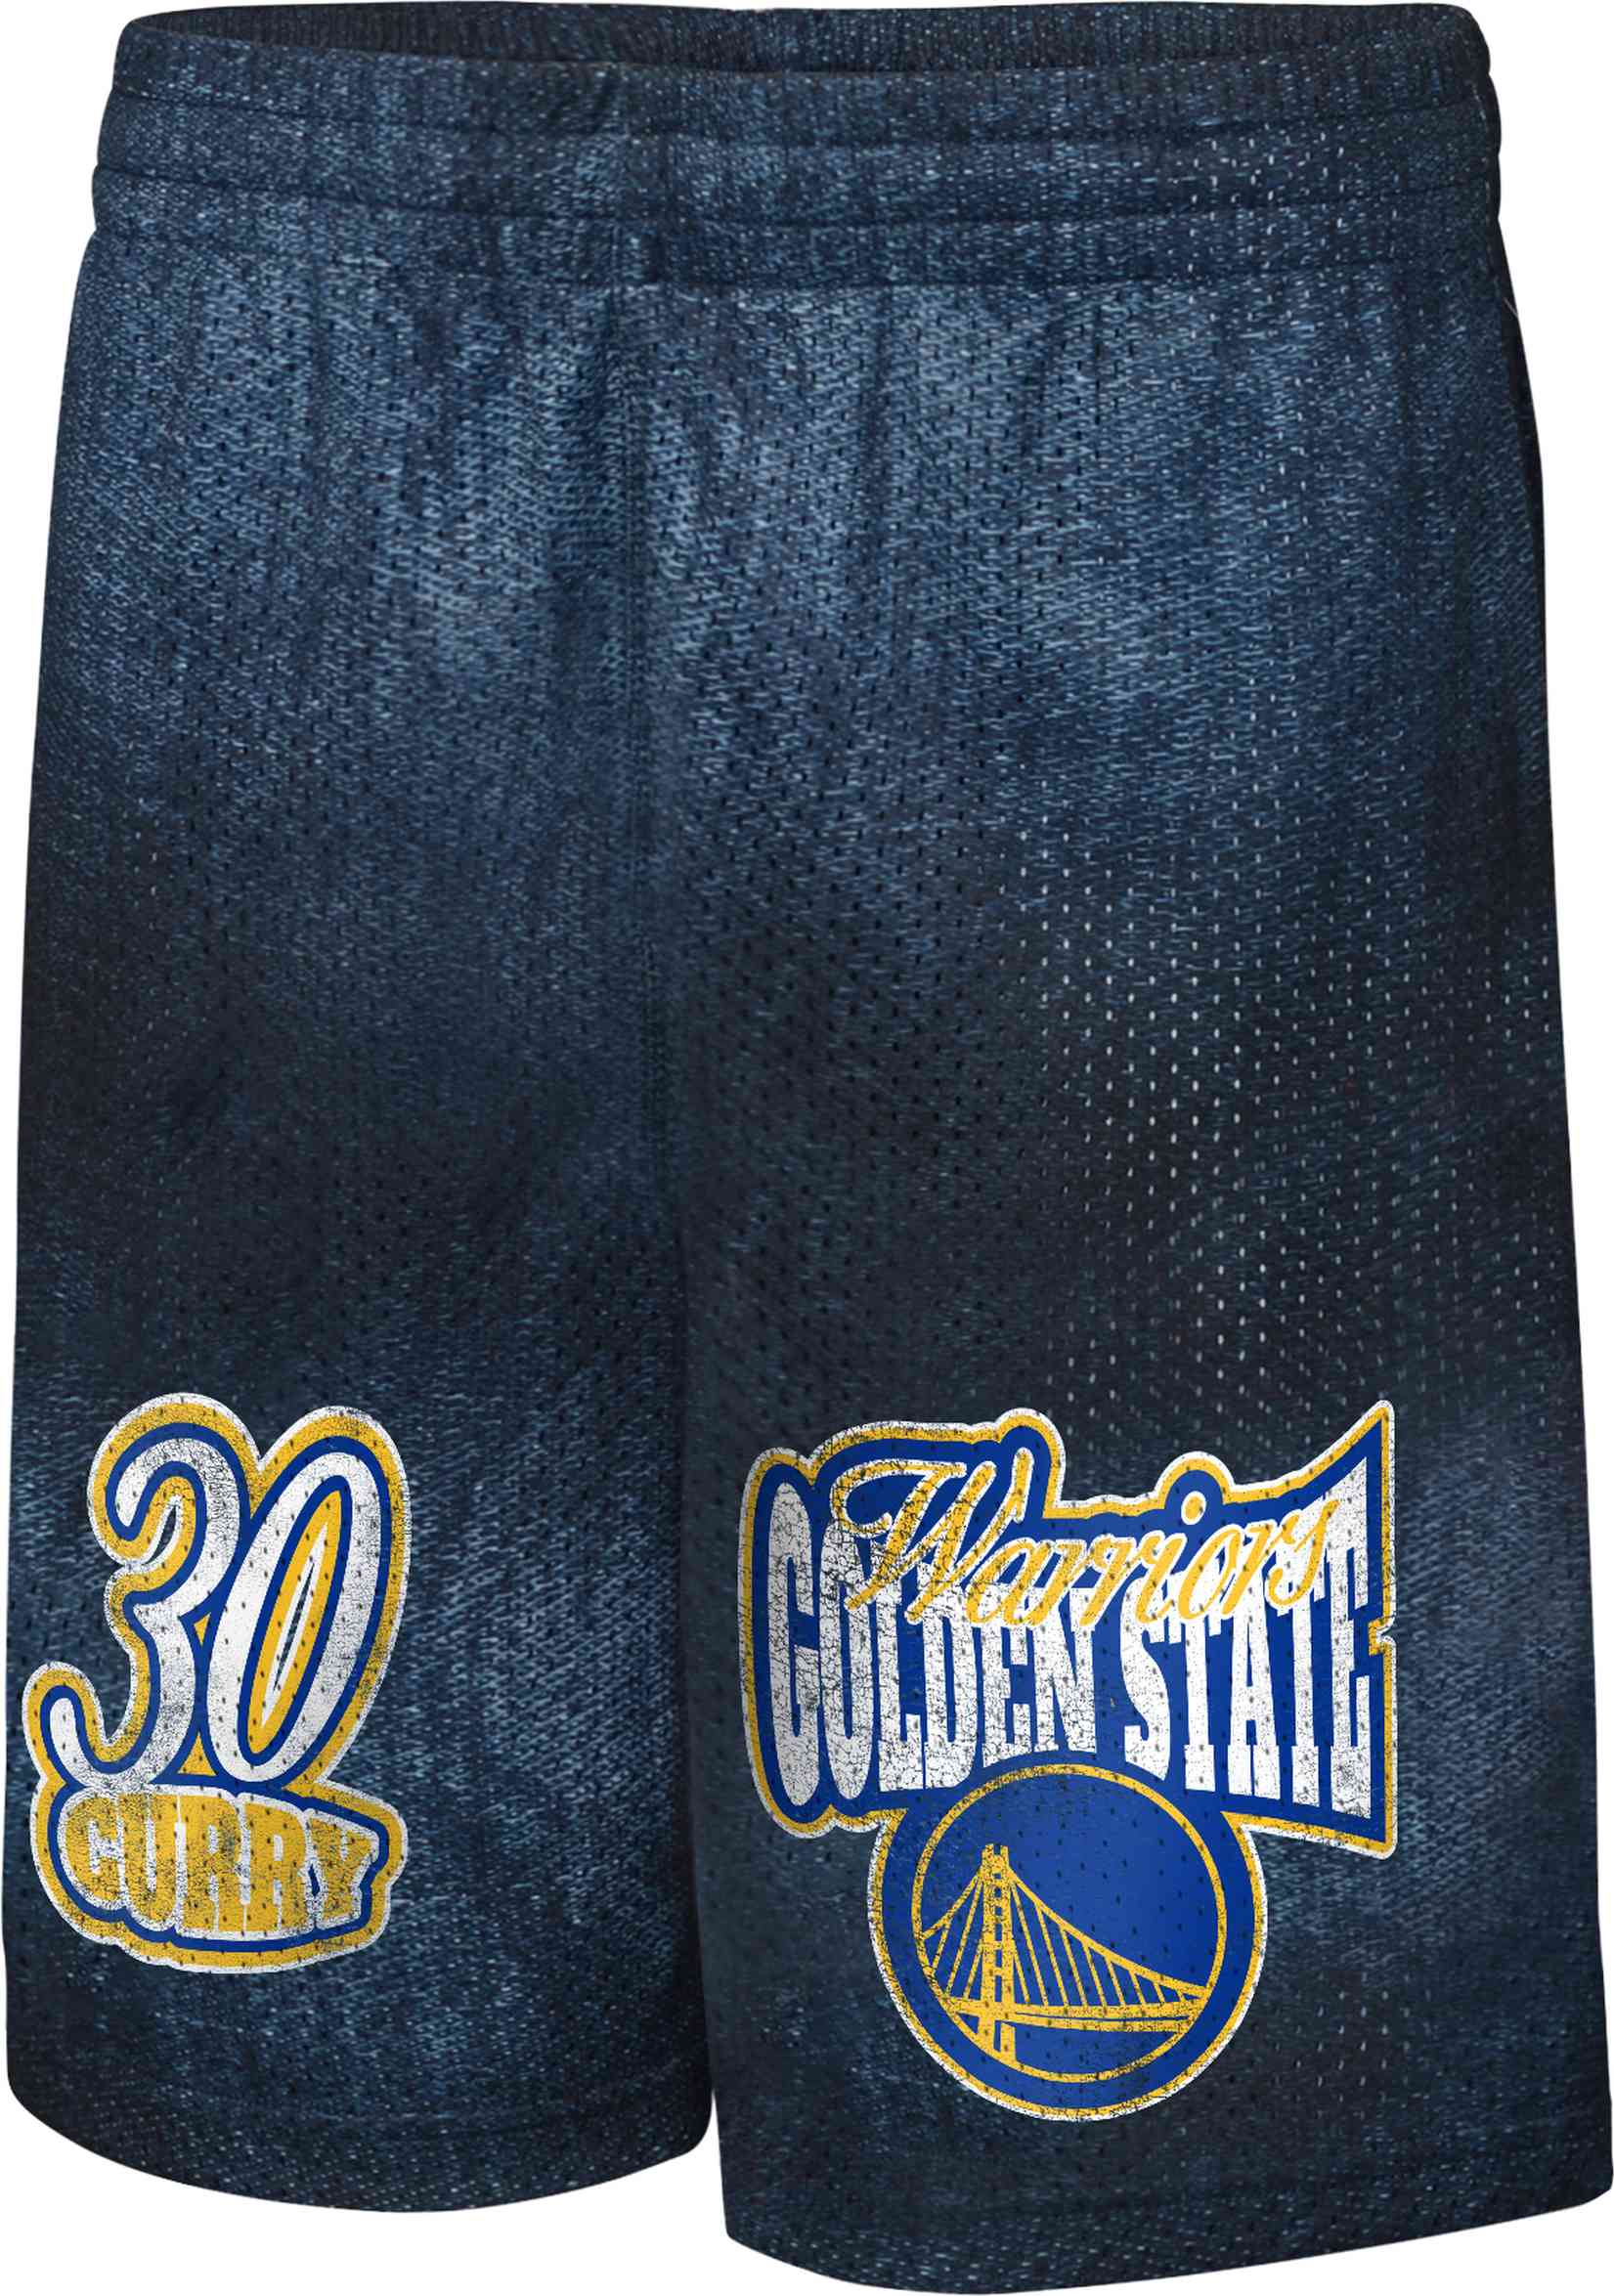 Outerstuff - NBA Golden State Warriors Heating Up Curry Shorts